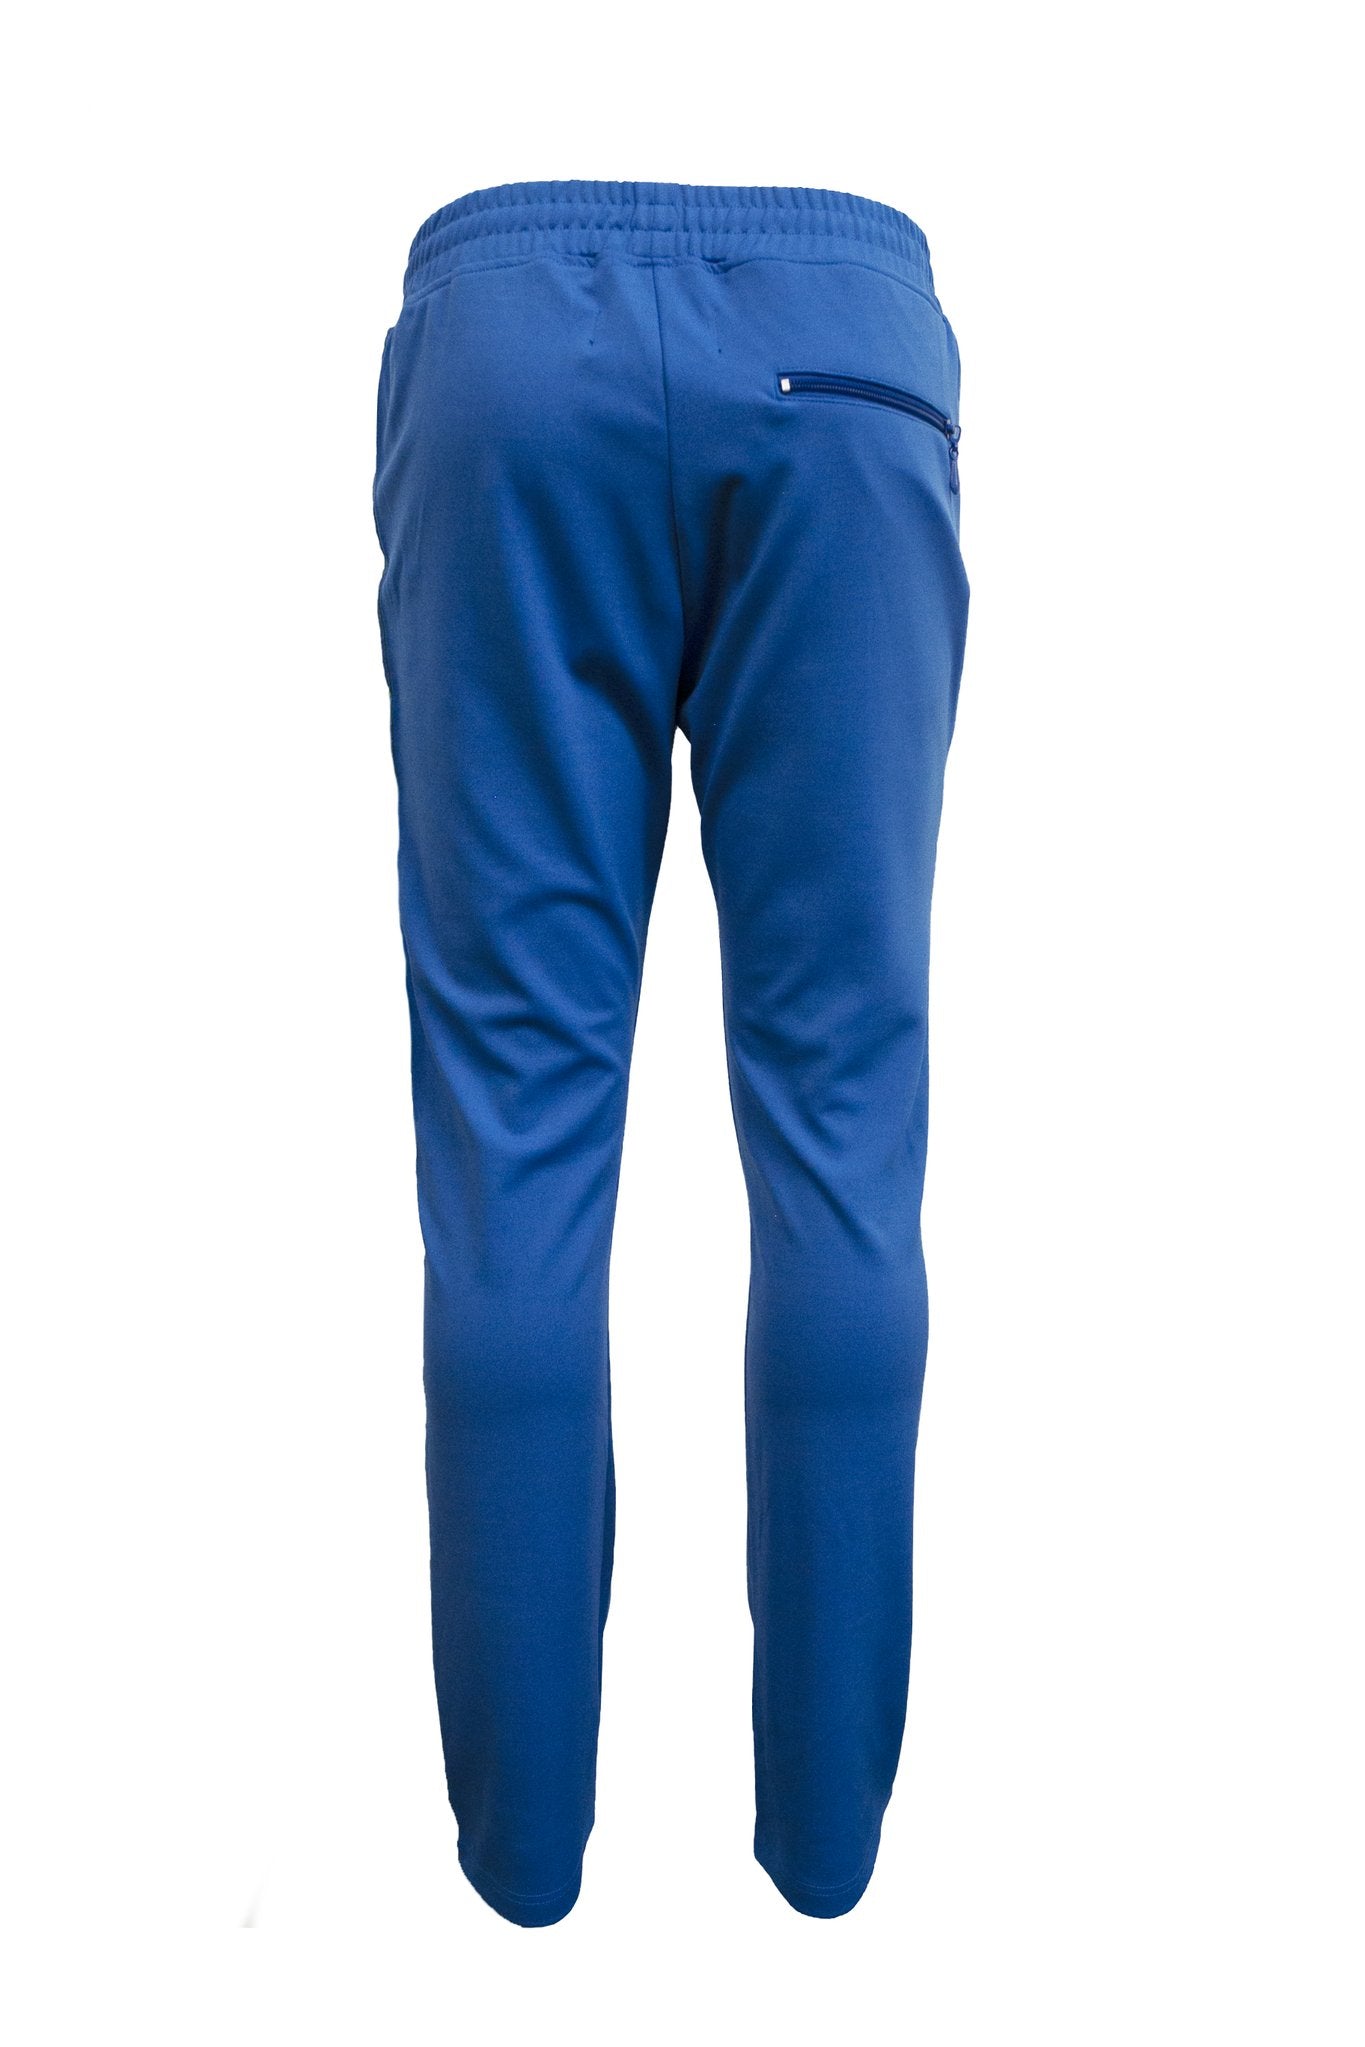 Trademark Track Pants - Blue